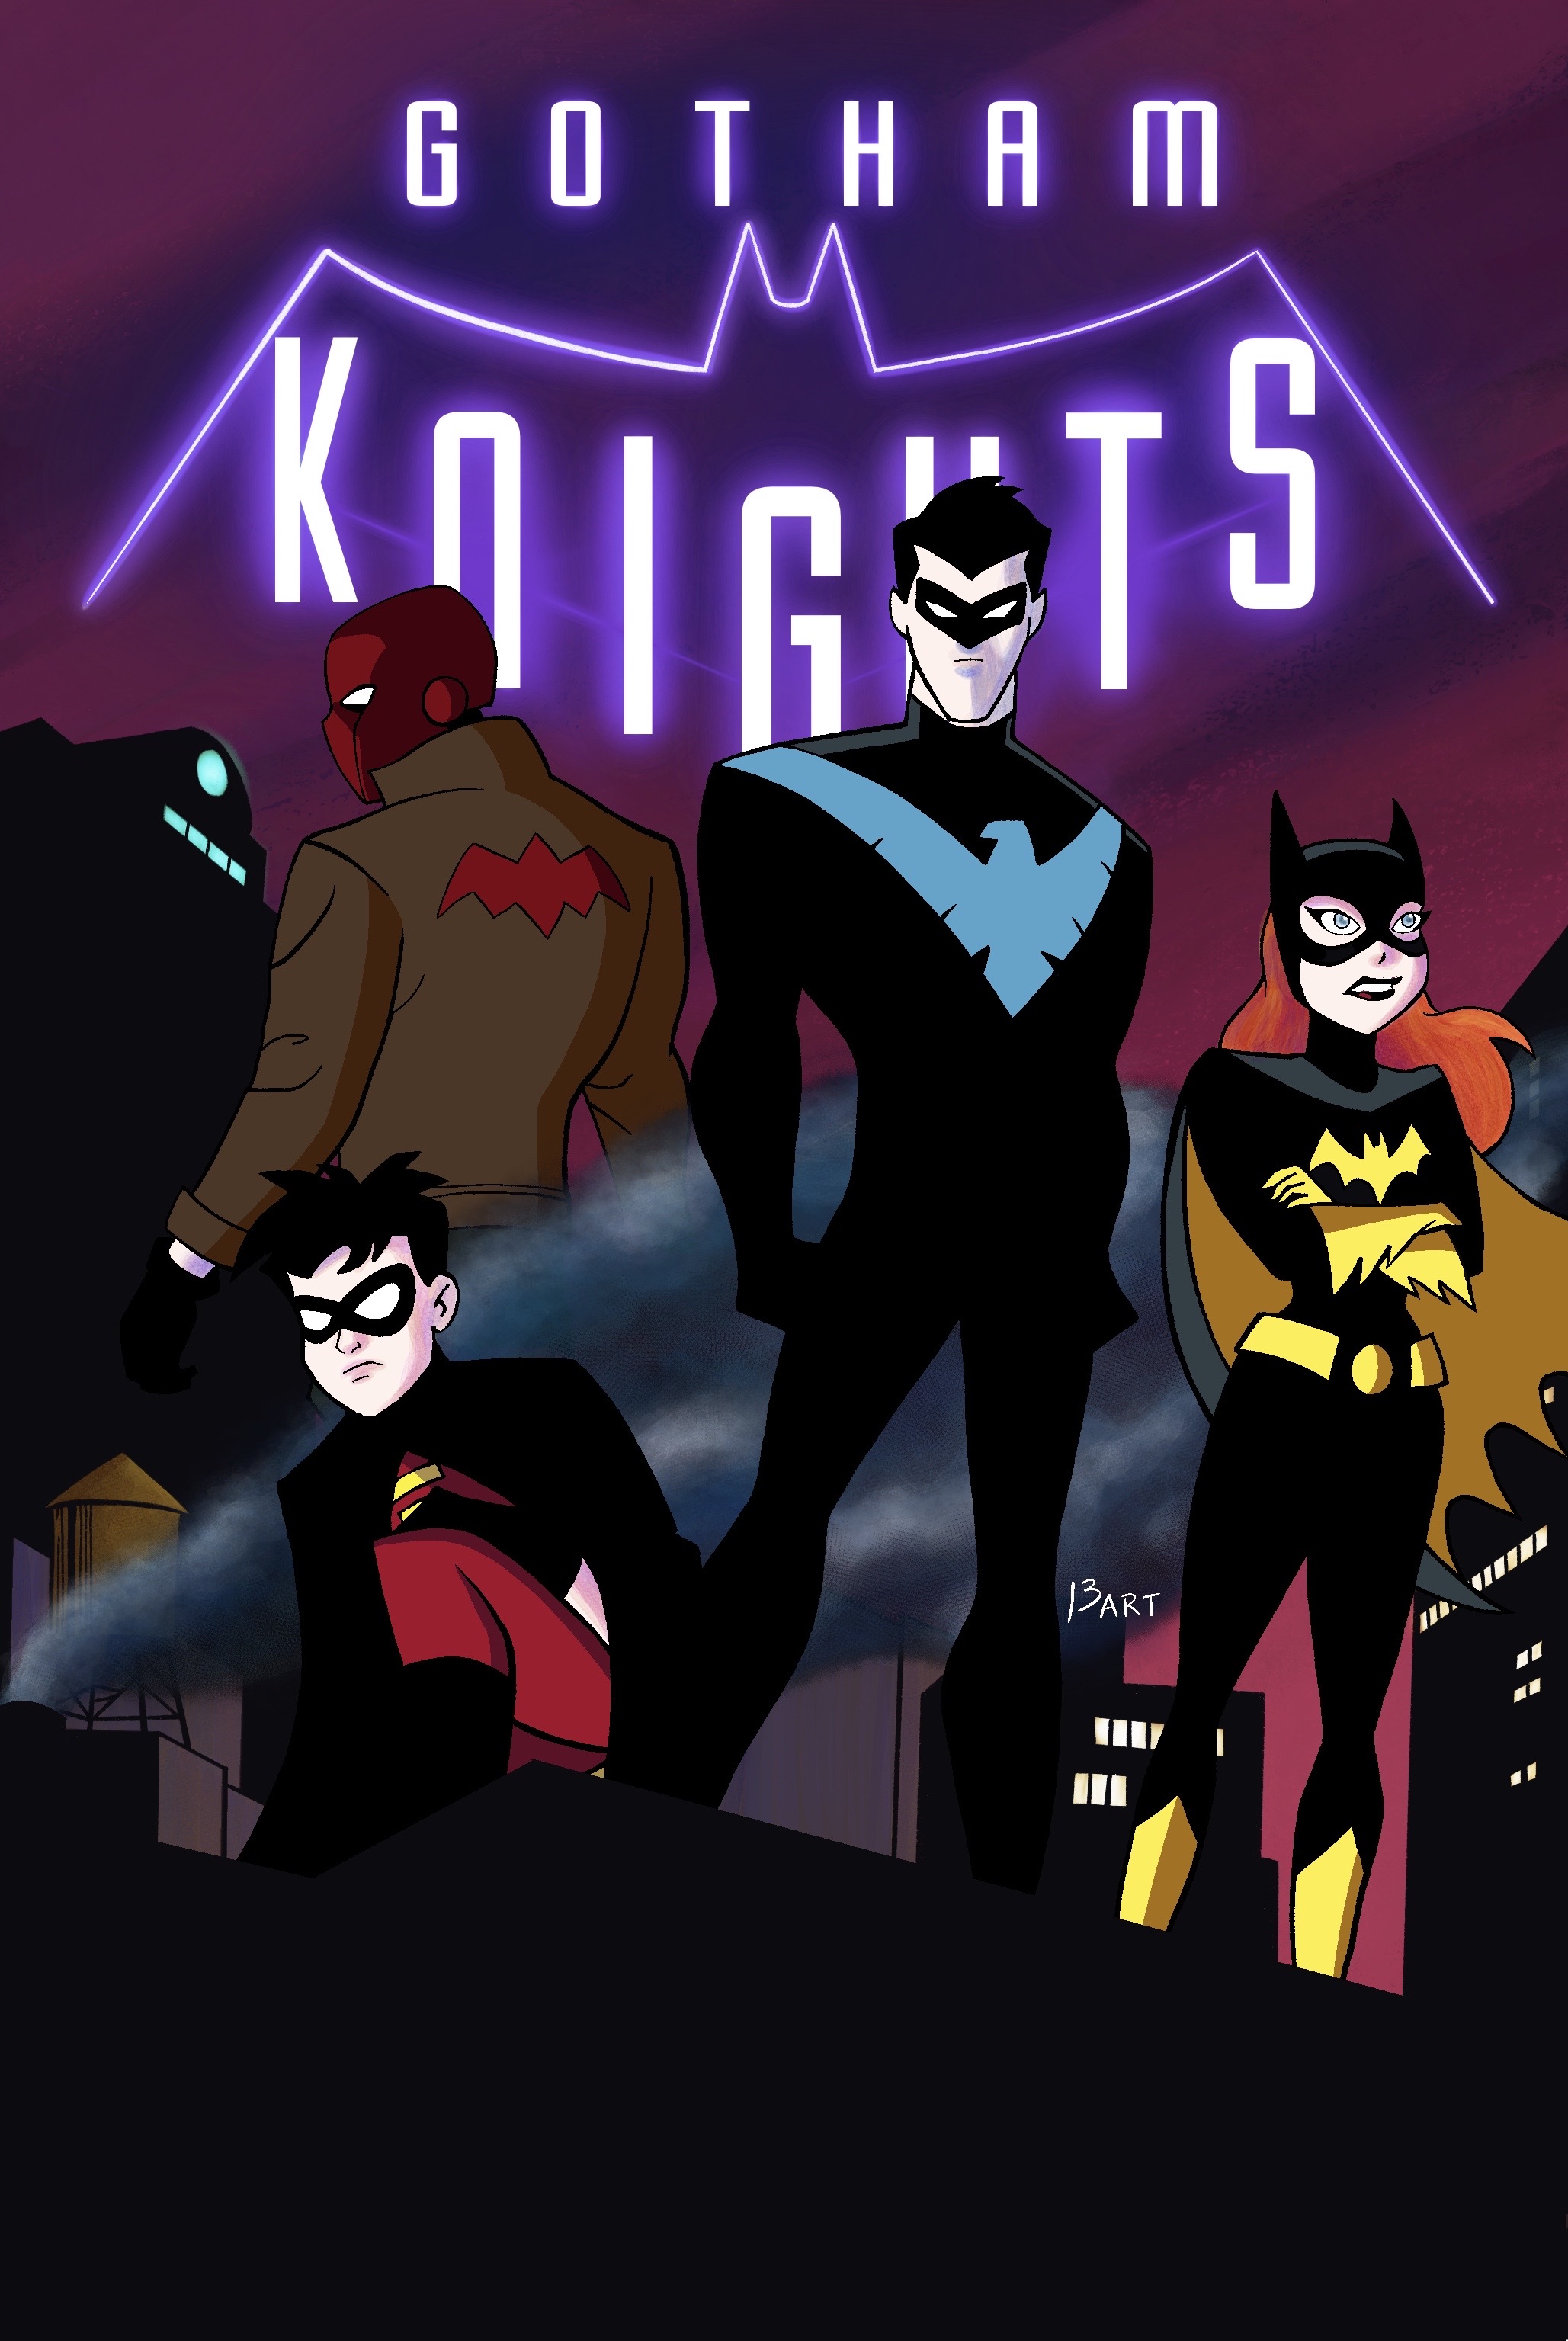 Gotham Knights Animated Style by Tyraknifesaurus on DeviantArt